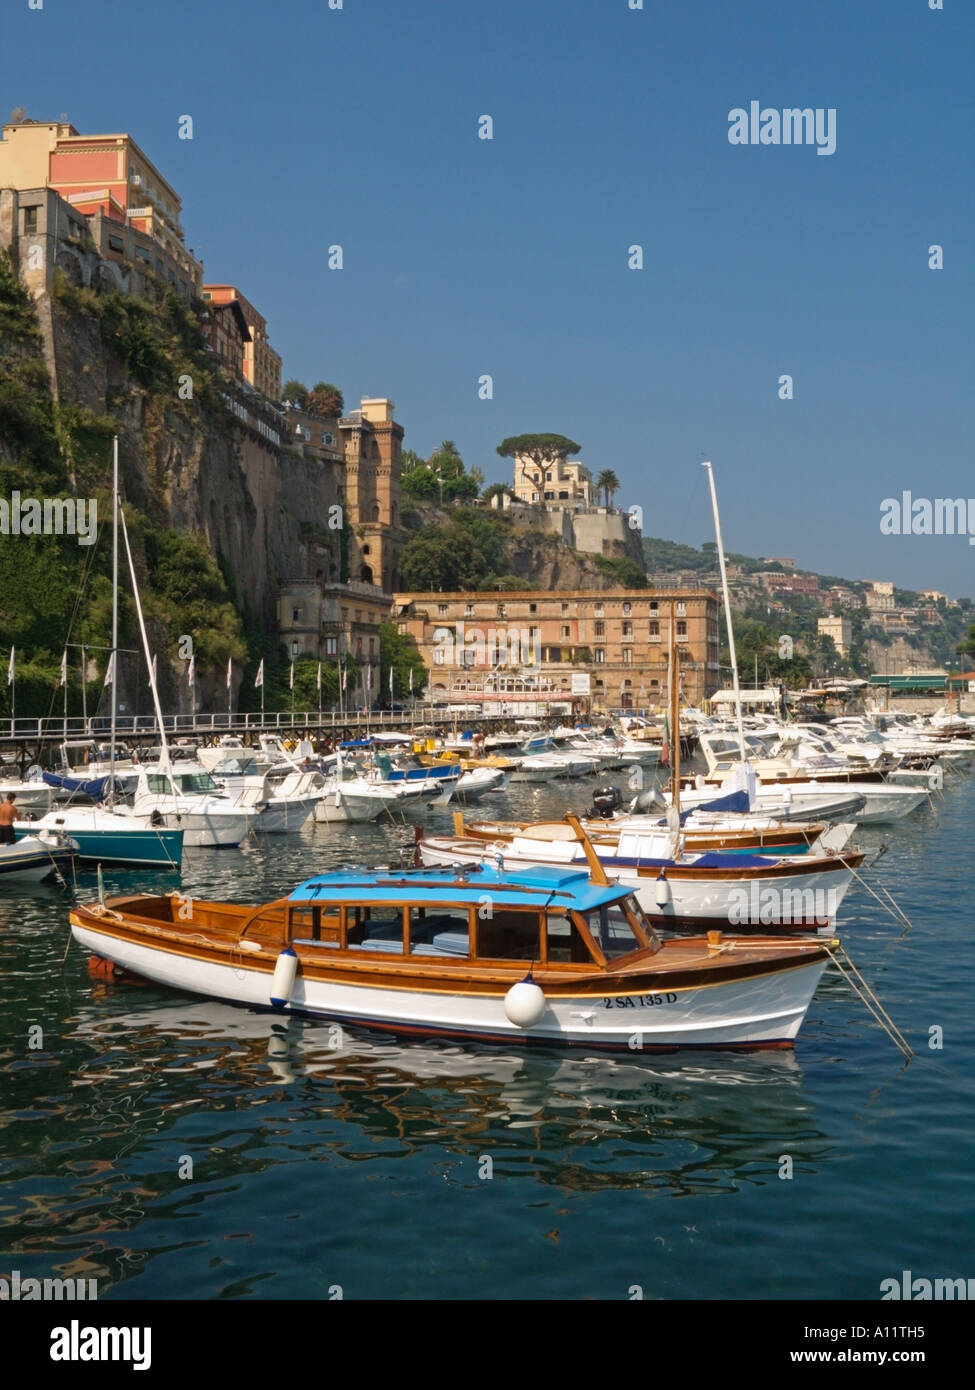 Marina Piccola Sorrento, Port of Sorrento, Sorrento, Gulf of Naples, Amalfi Coast, Italy Stock Photo